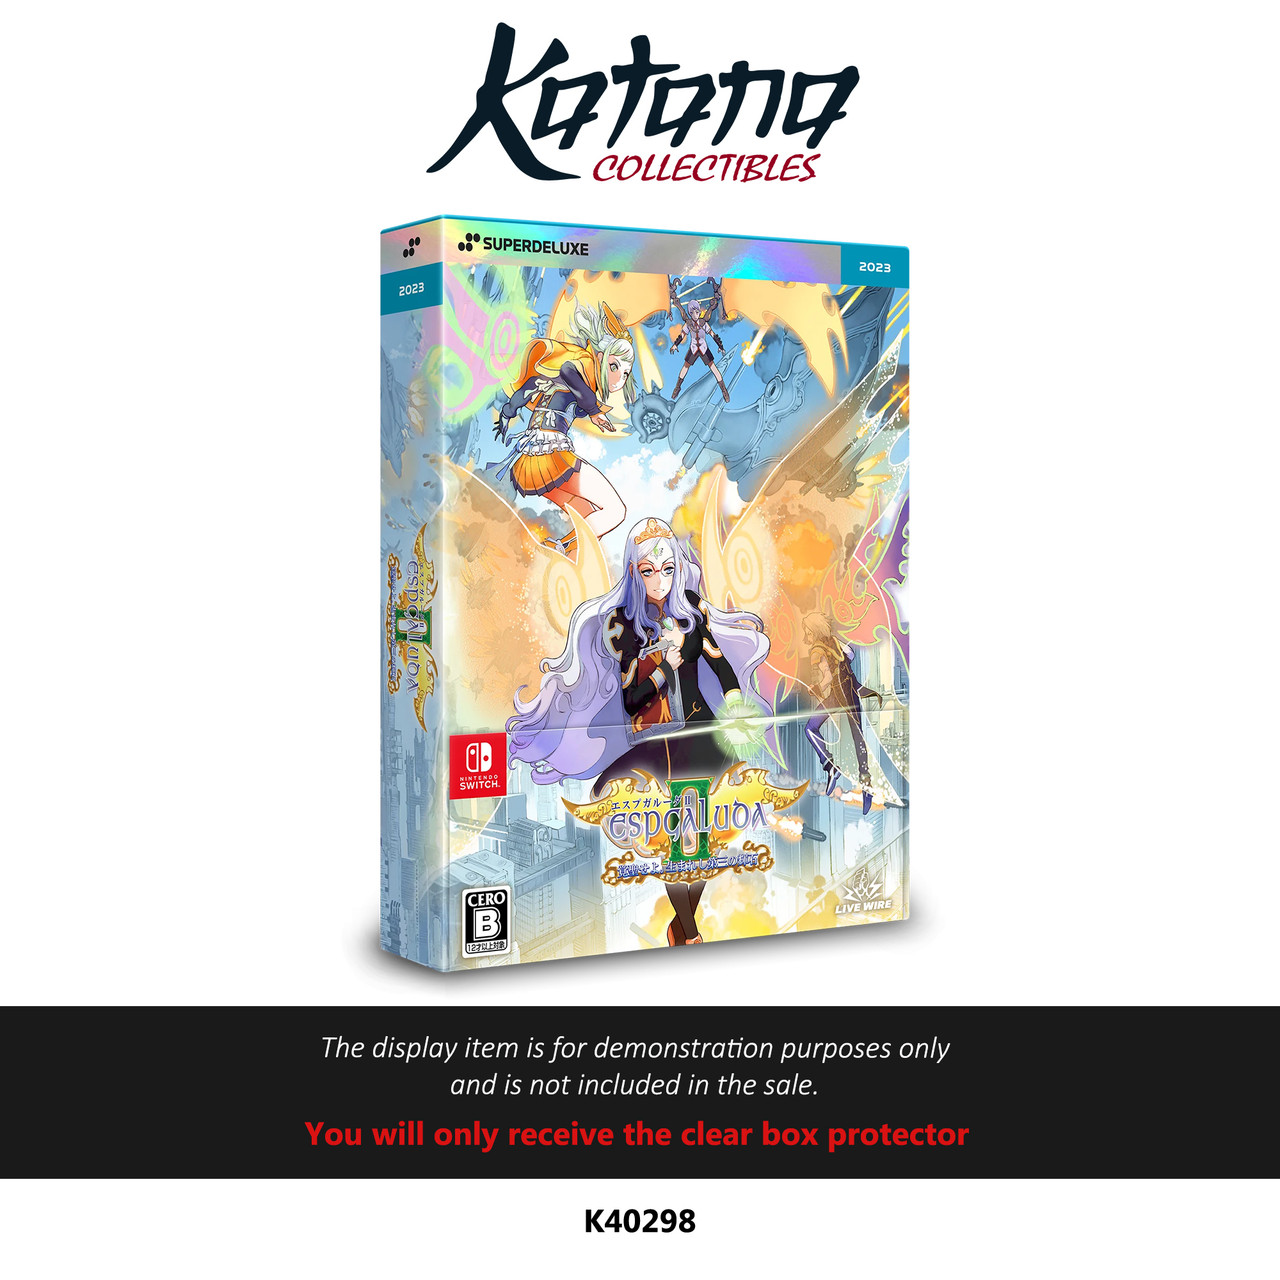 Katana Collectibles Protector For Nintendo Switch Espgaluda II Deluxe Edition